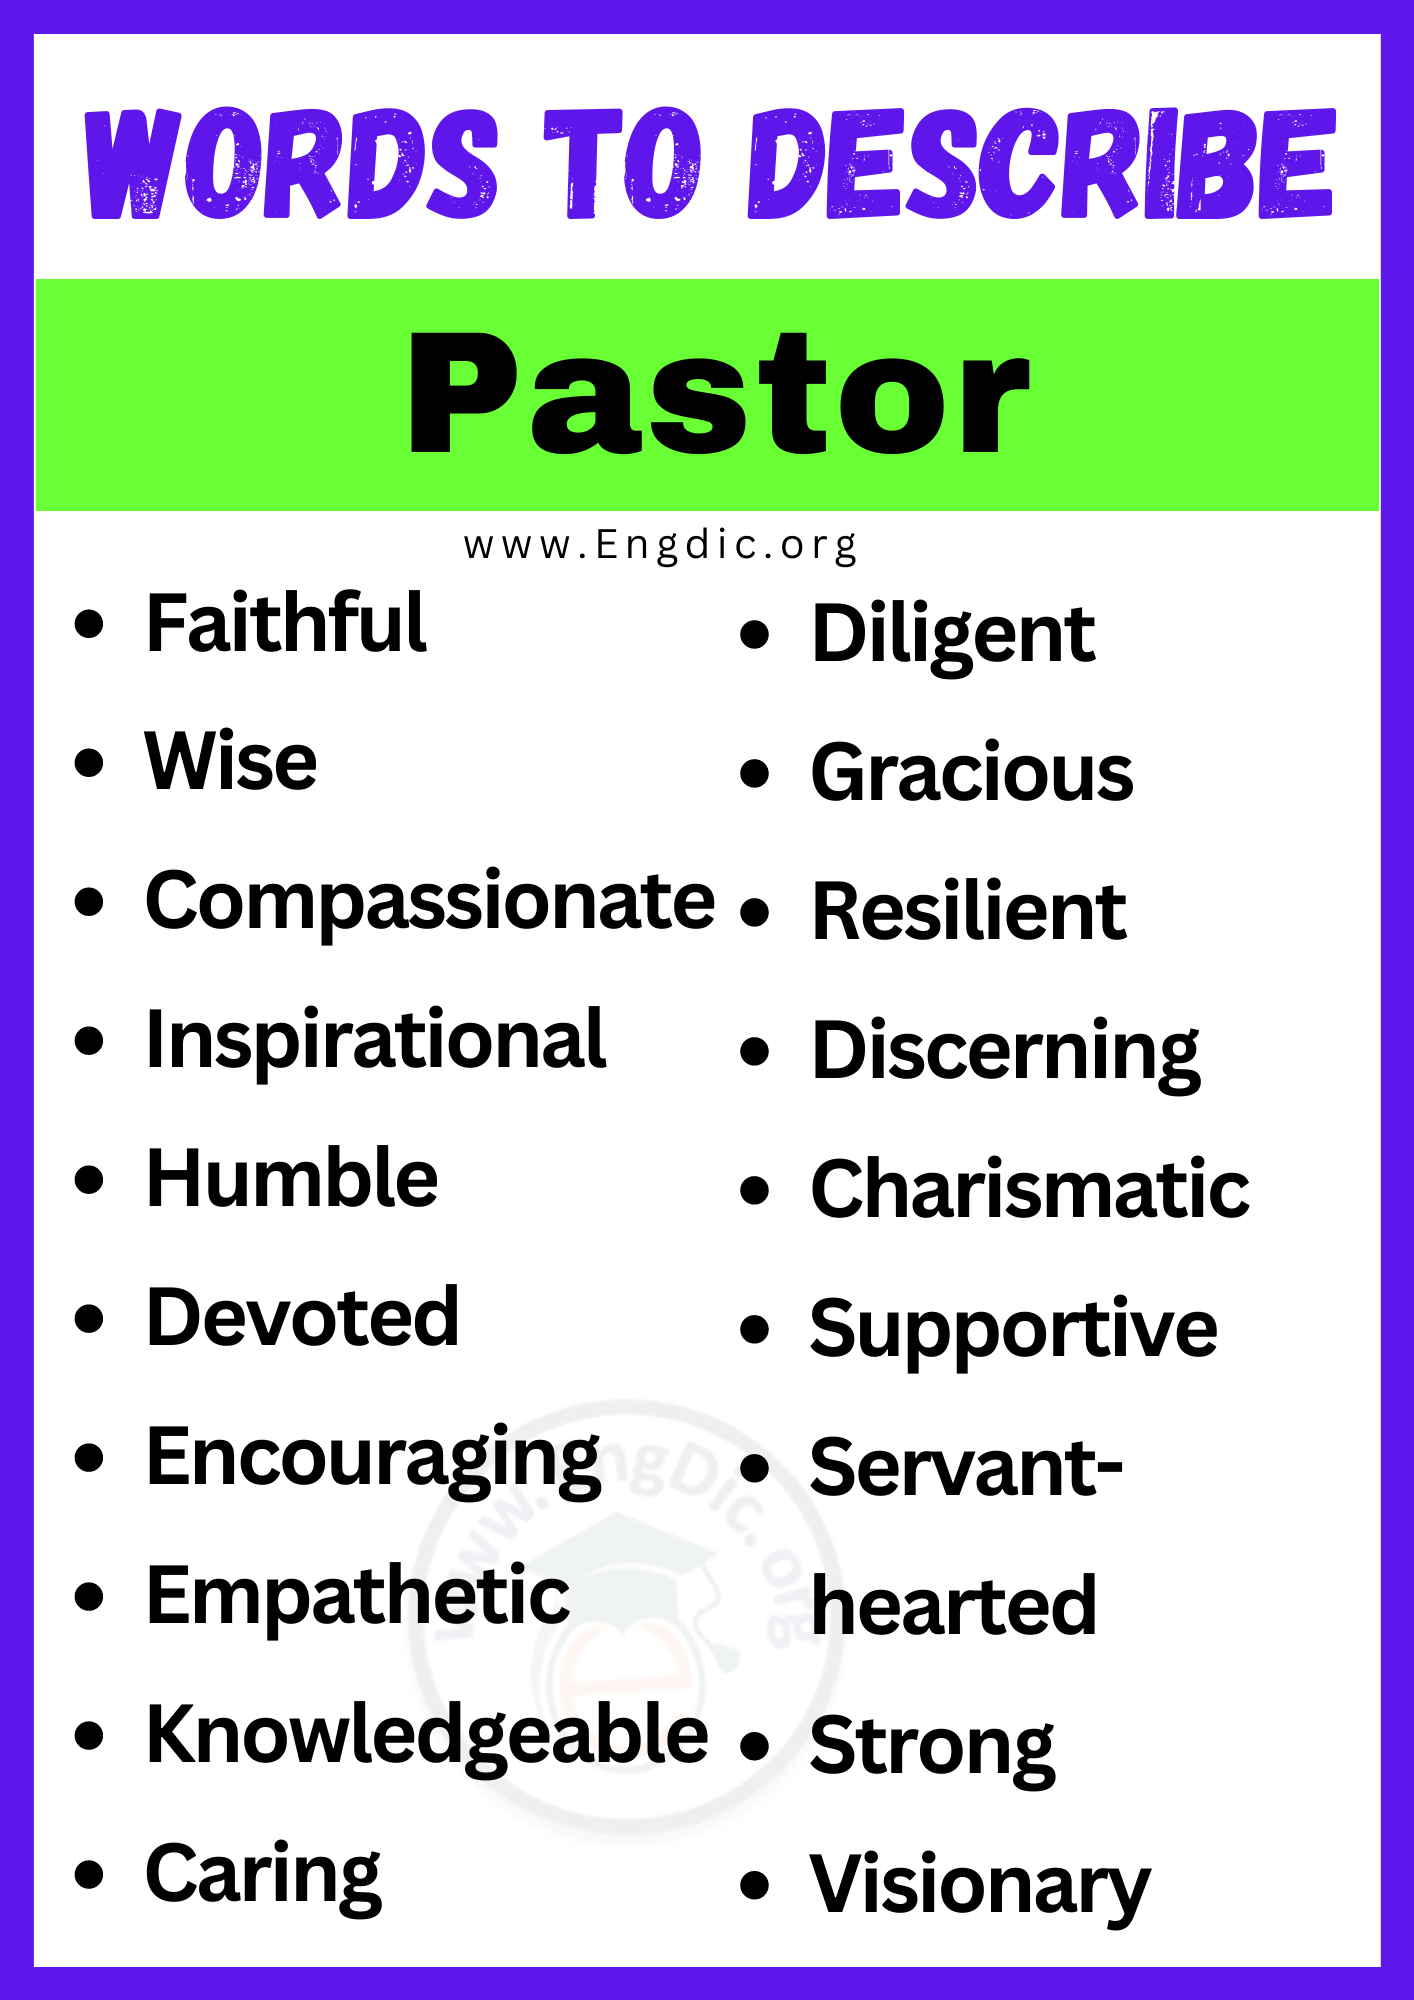 Words to Describe Pastor